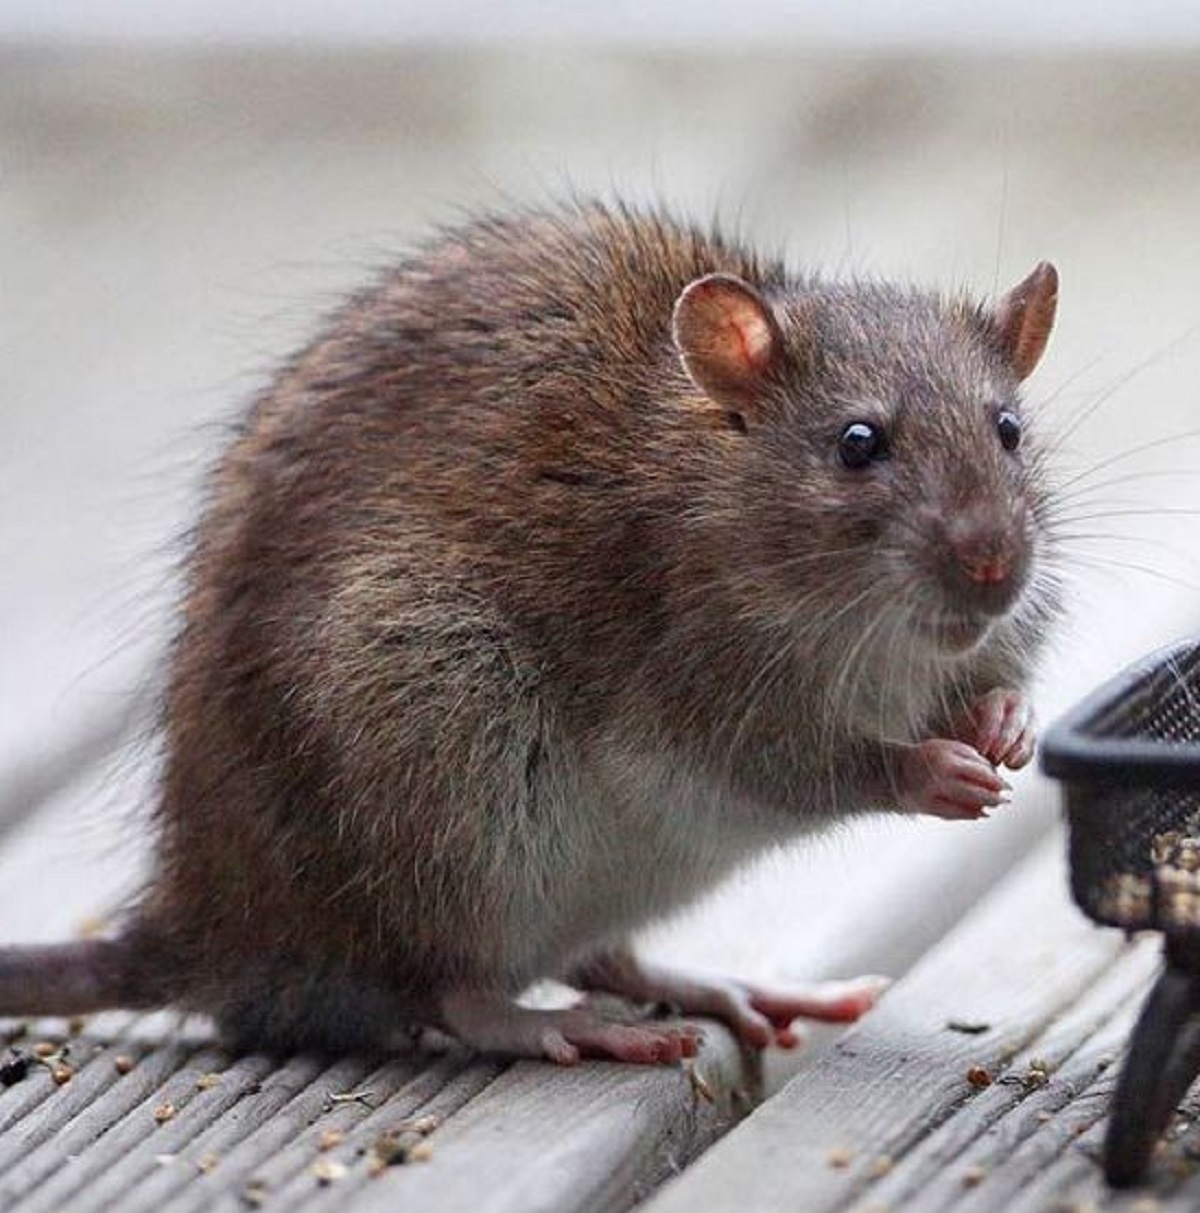 Inilah 7 Cara Mudah Menjebak Tikus di Rumah Menggunakan Bahan Dapur, Yuk Simak